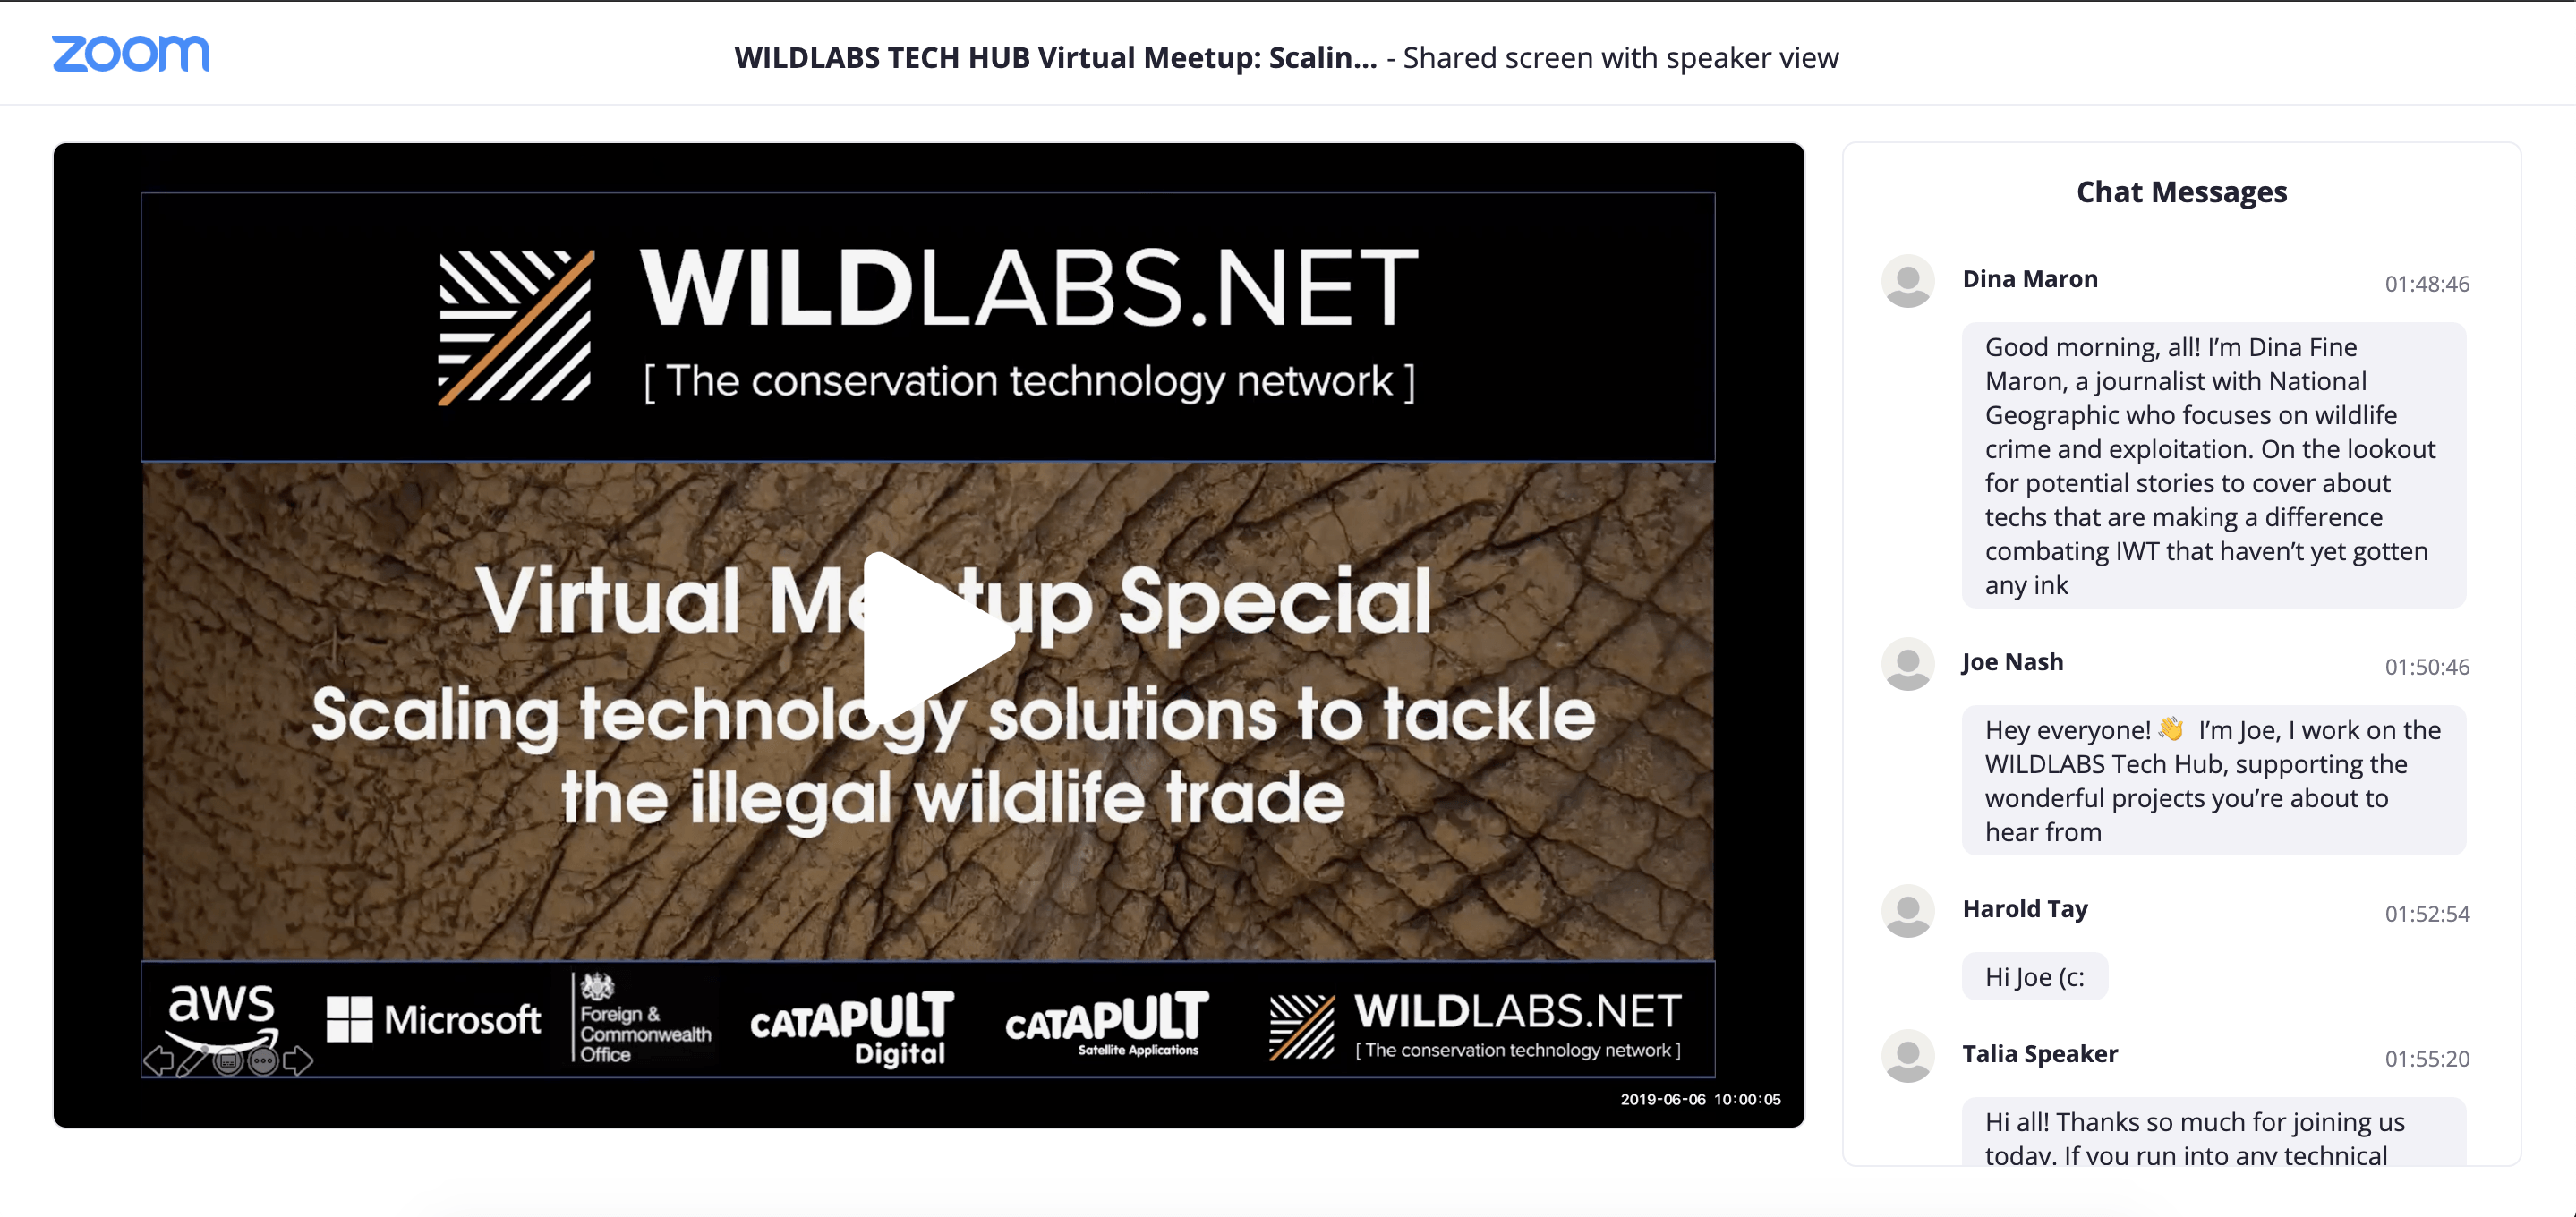 WILDLABS Virtual Meetup Link to Tech Hub Video Recording